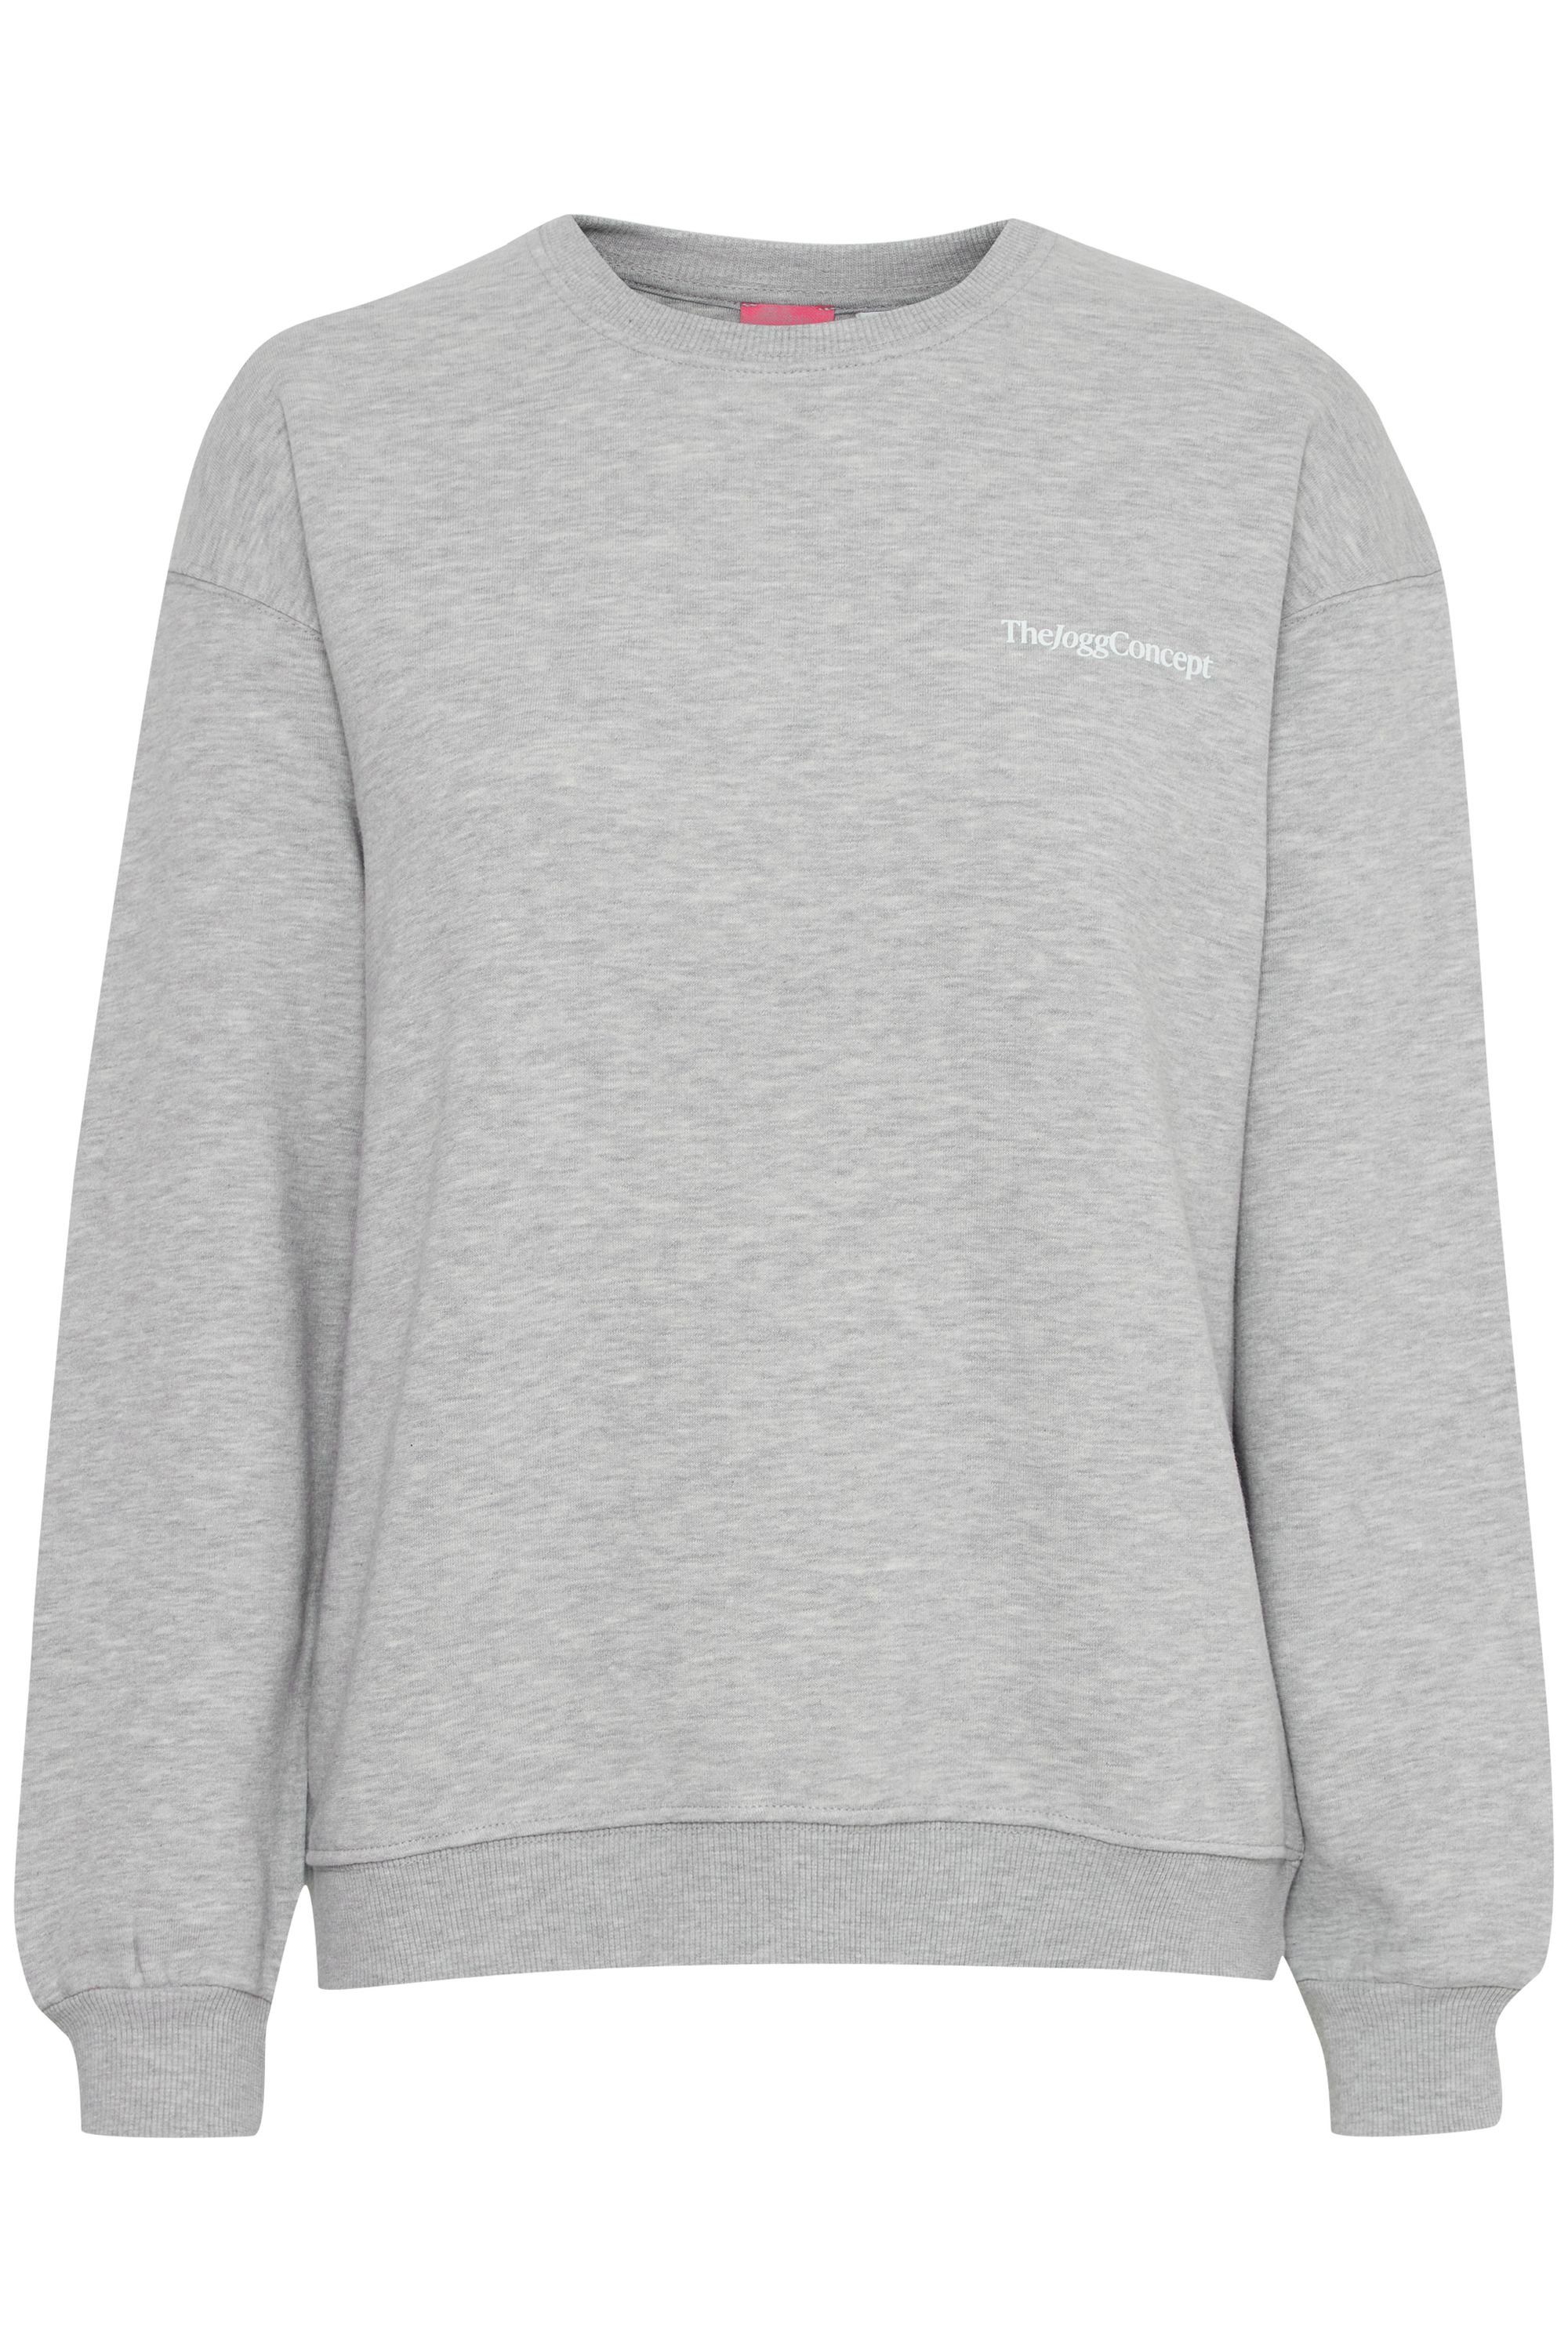 Melange 22800280 JCRAFINE Grey - SWEAT (201747) Sweatshirt Light TheJoggConcept.